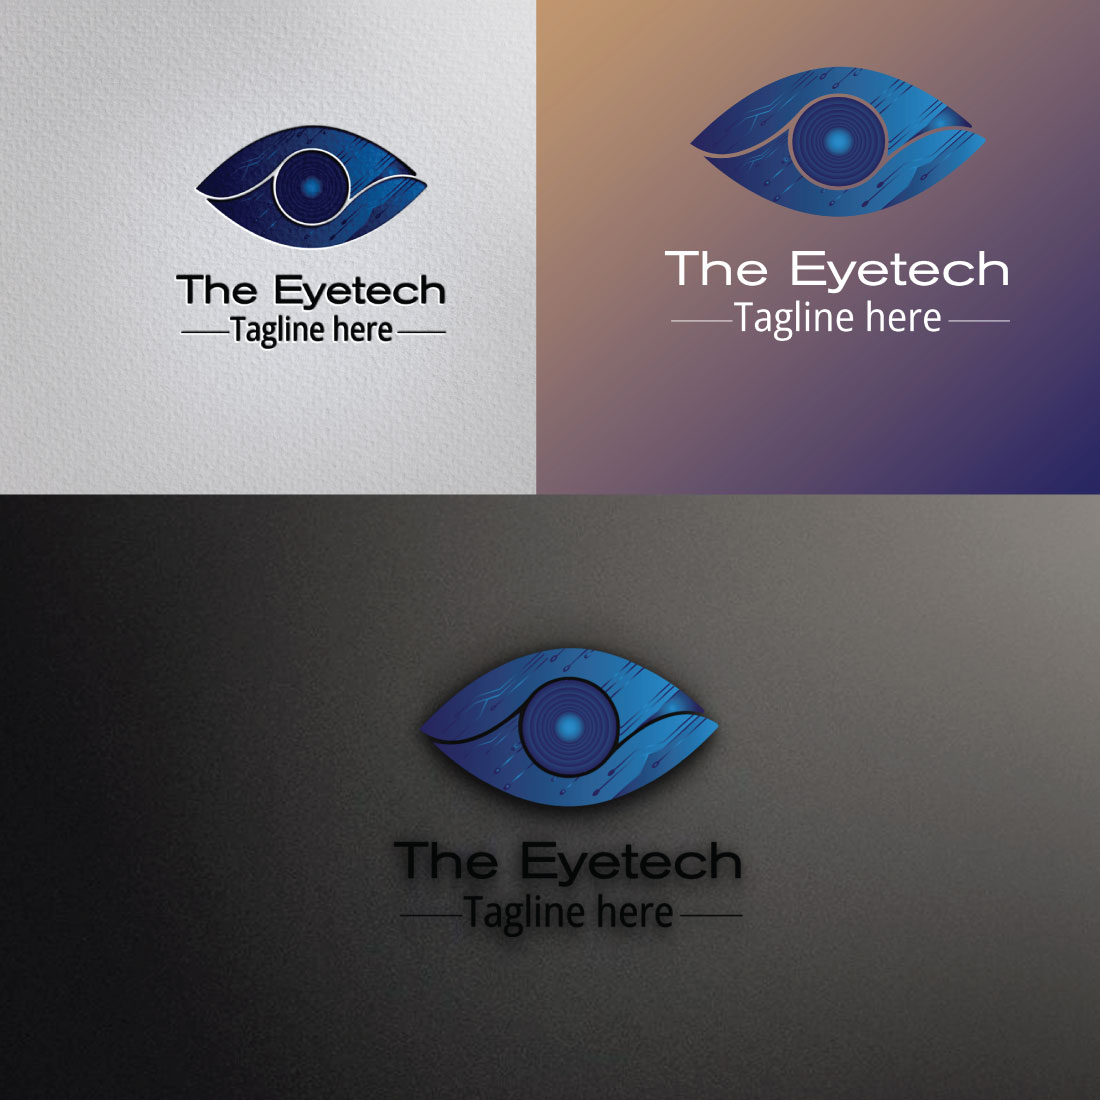 The eye buisness logo (tech logo) preview image.